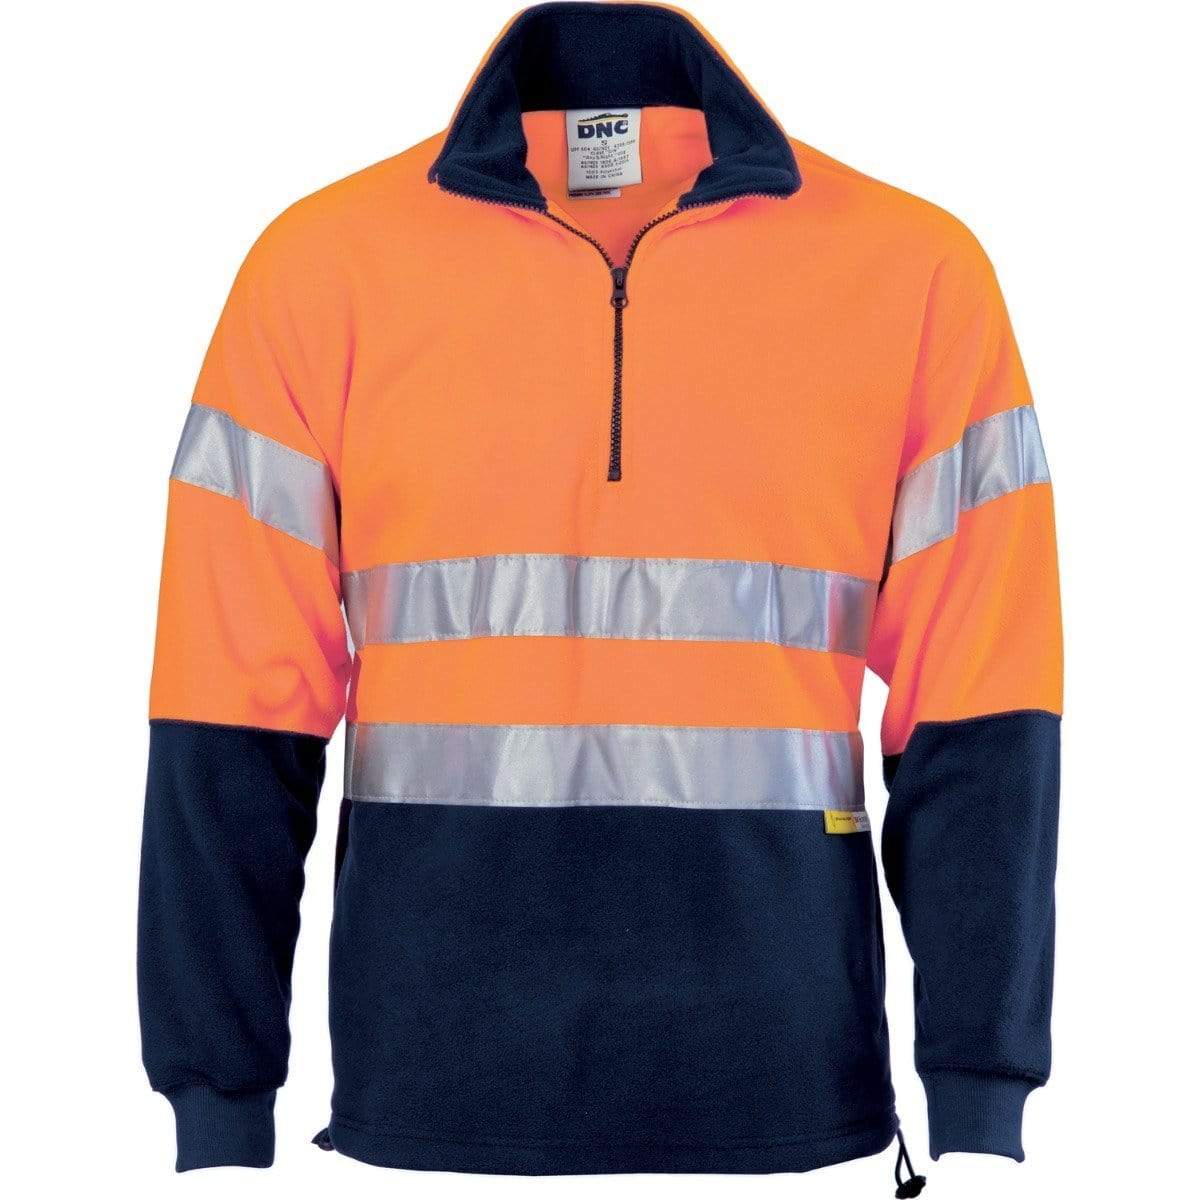 Dnc Workwear Hi-vis Two-tone 1/2 Zip Polar Fleece With 3m Reflective Tape - 3829 Work Wear DNC Workwear Orange/Navy XS 